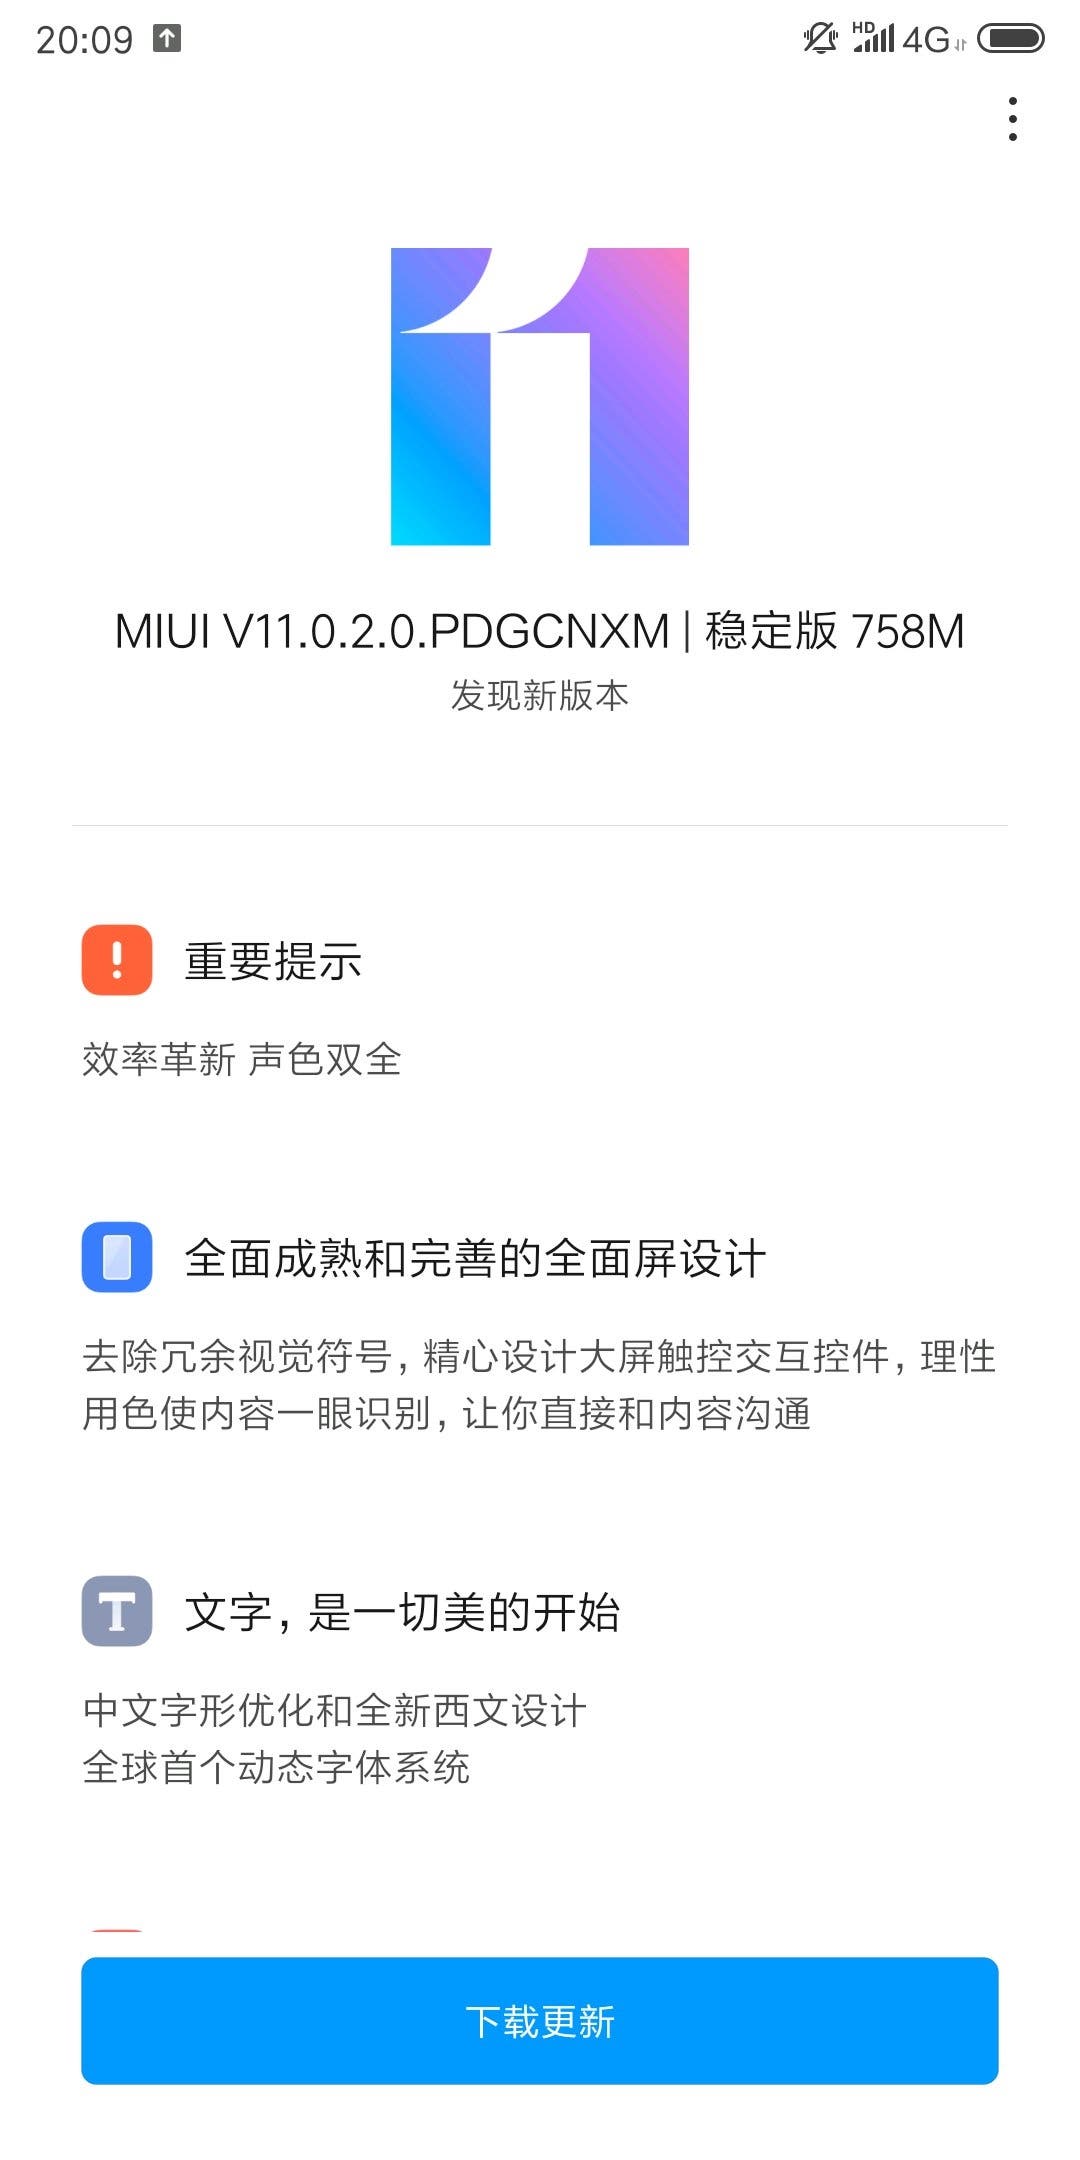 MIUI 11 for Xiaomi Mi MIX 2S